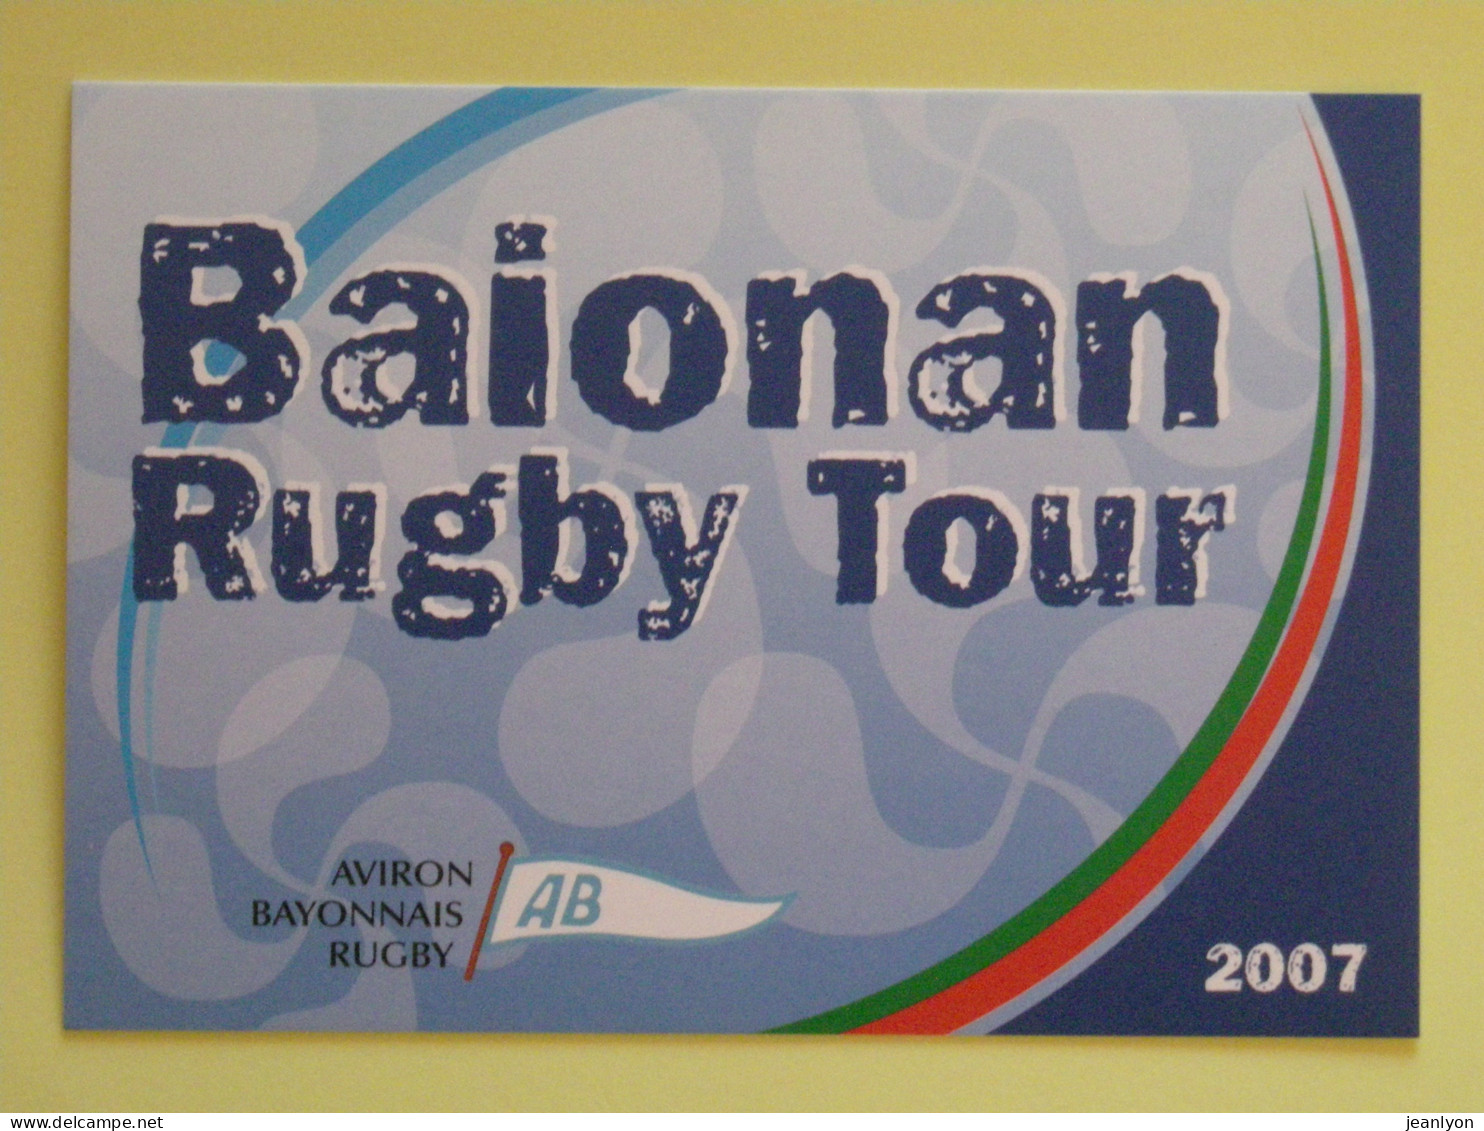 RUGBY - AVIRON BAYONNAIS - Carte Publicitaire Baionan Rugby Tour 2007 - Rugby